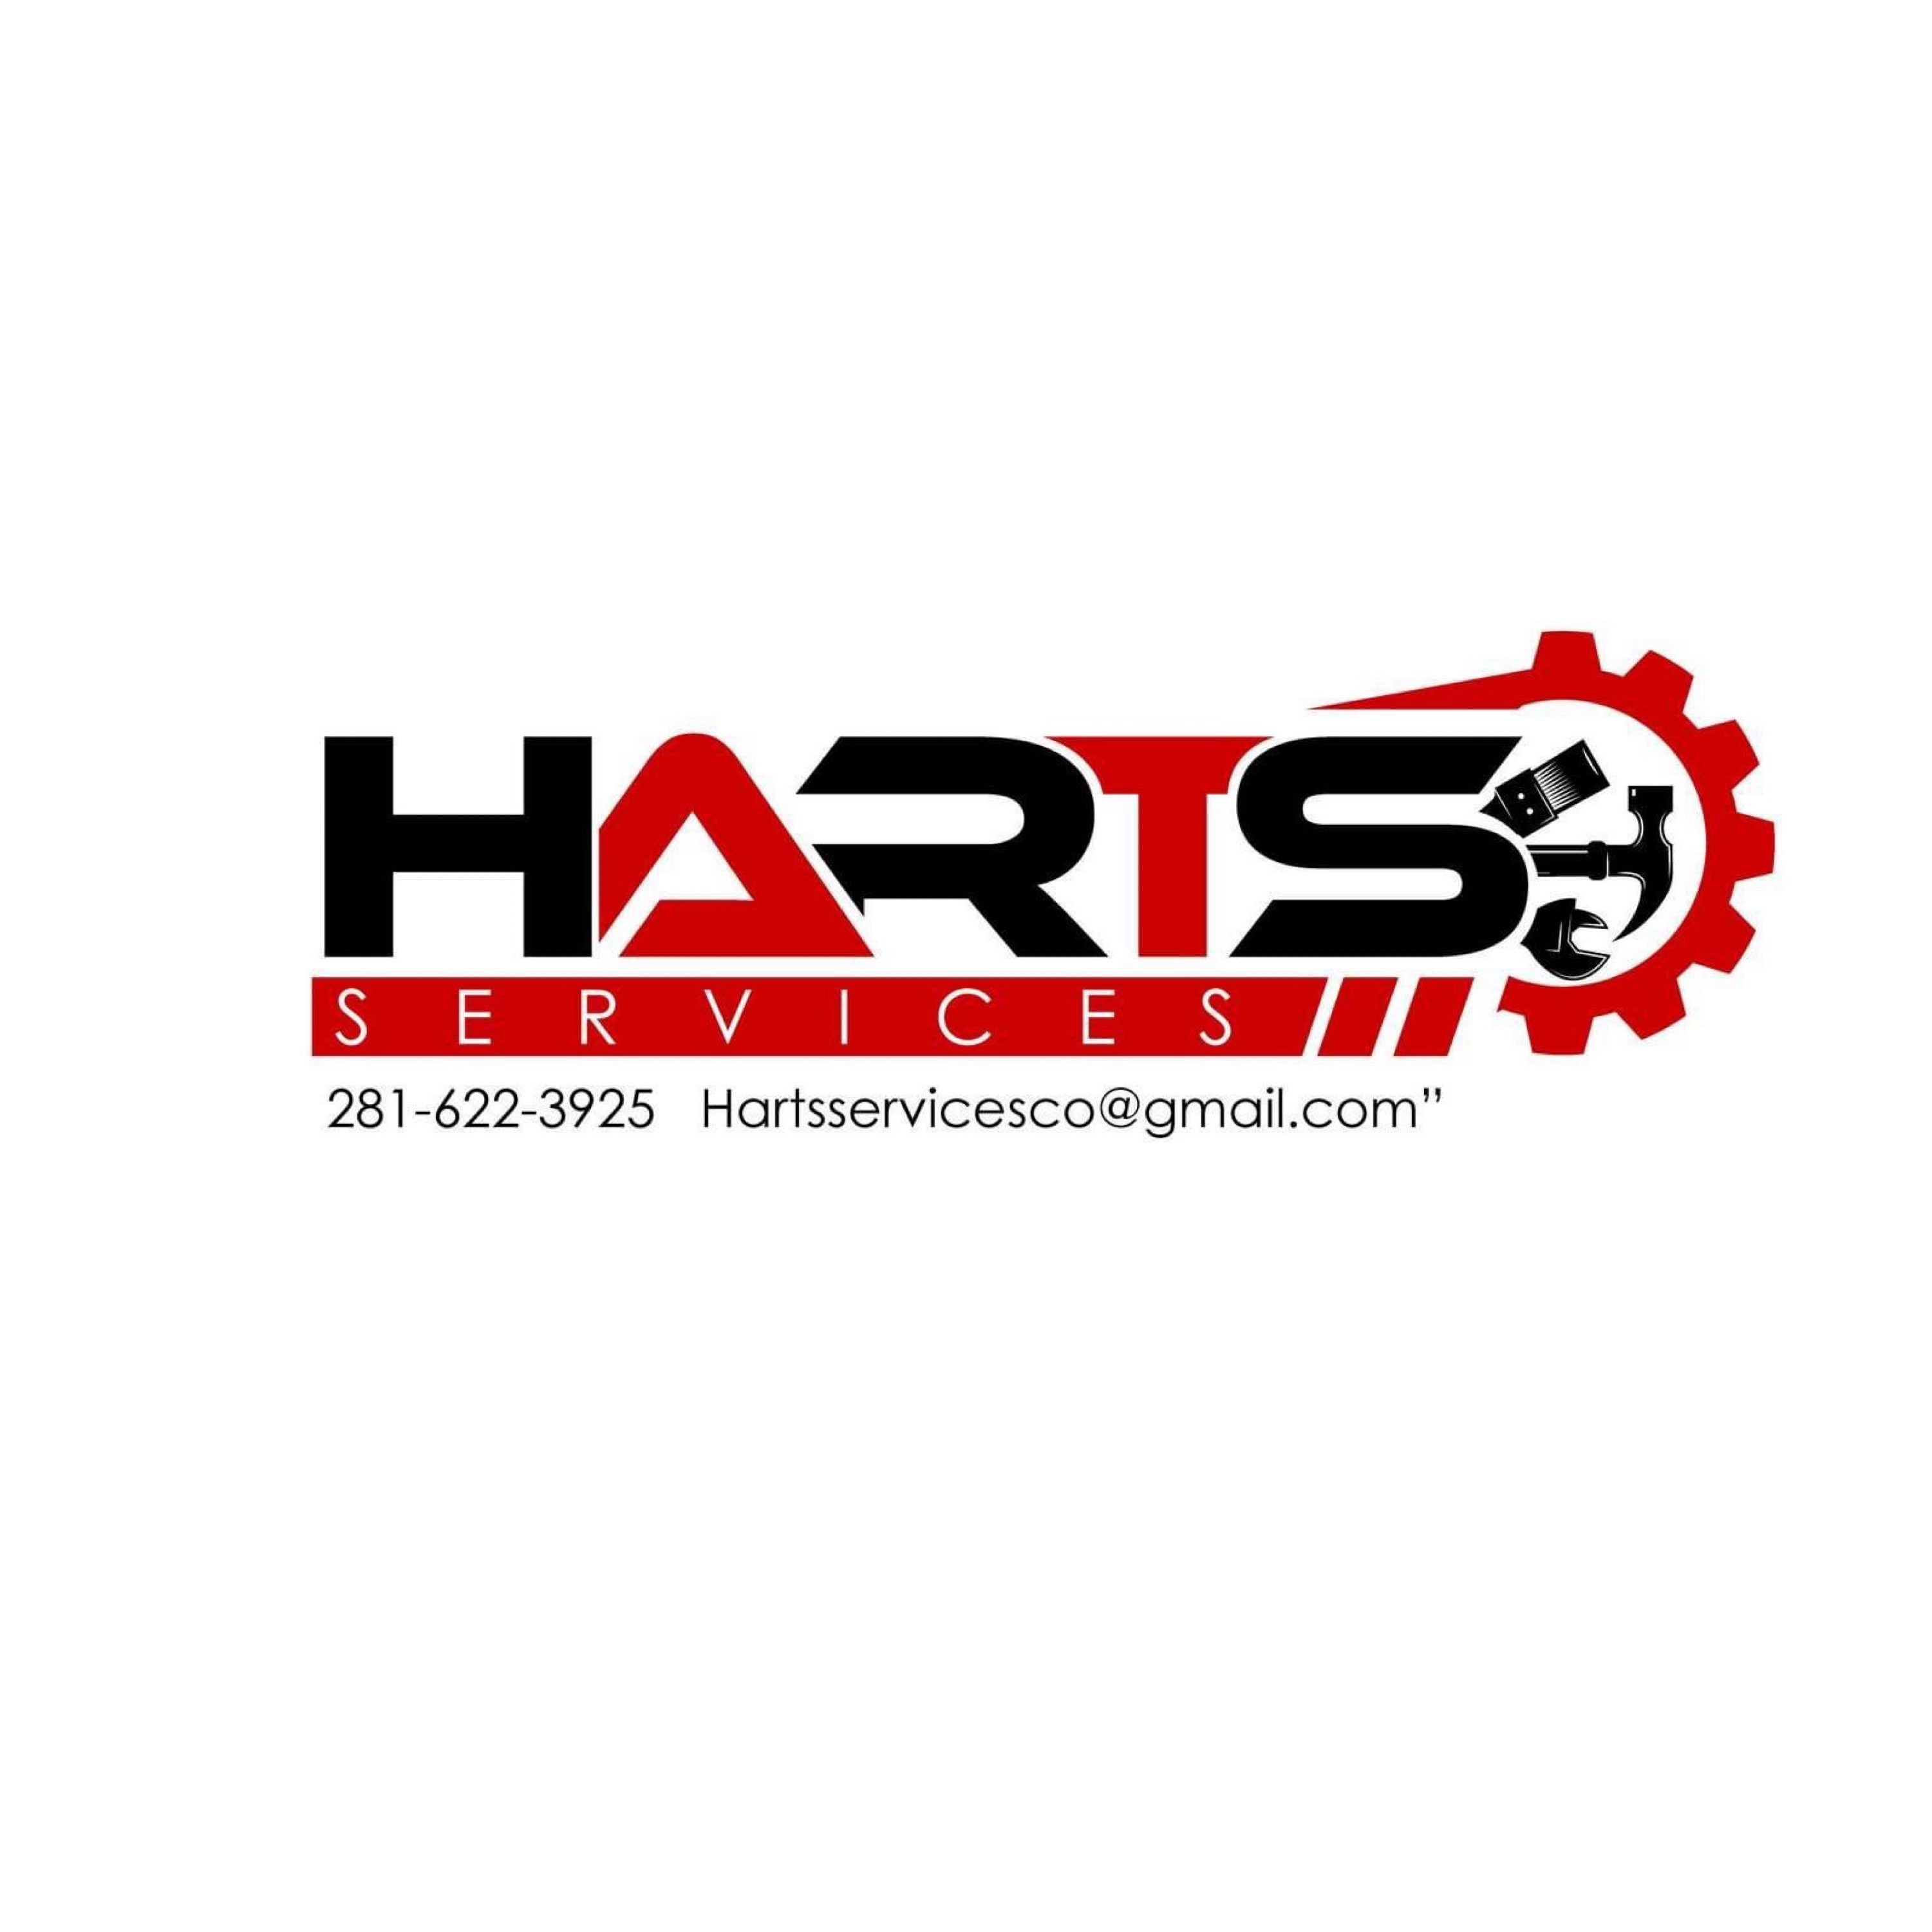 Hart's Services Logo